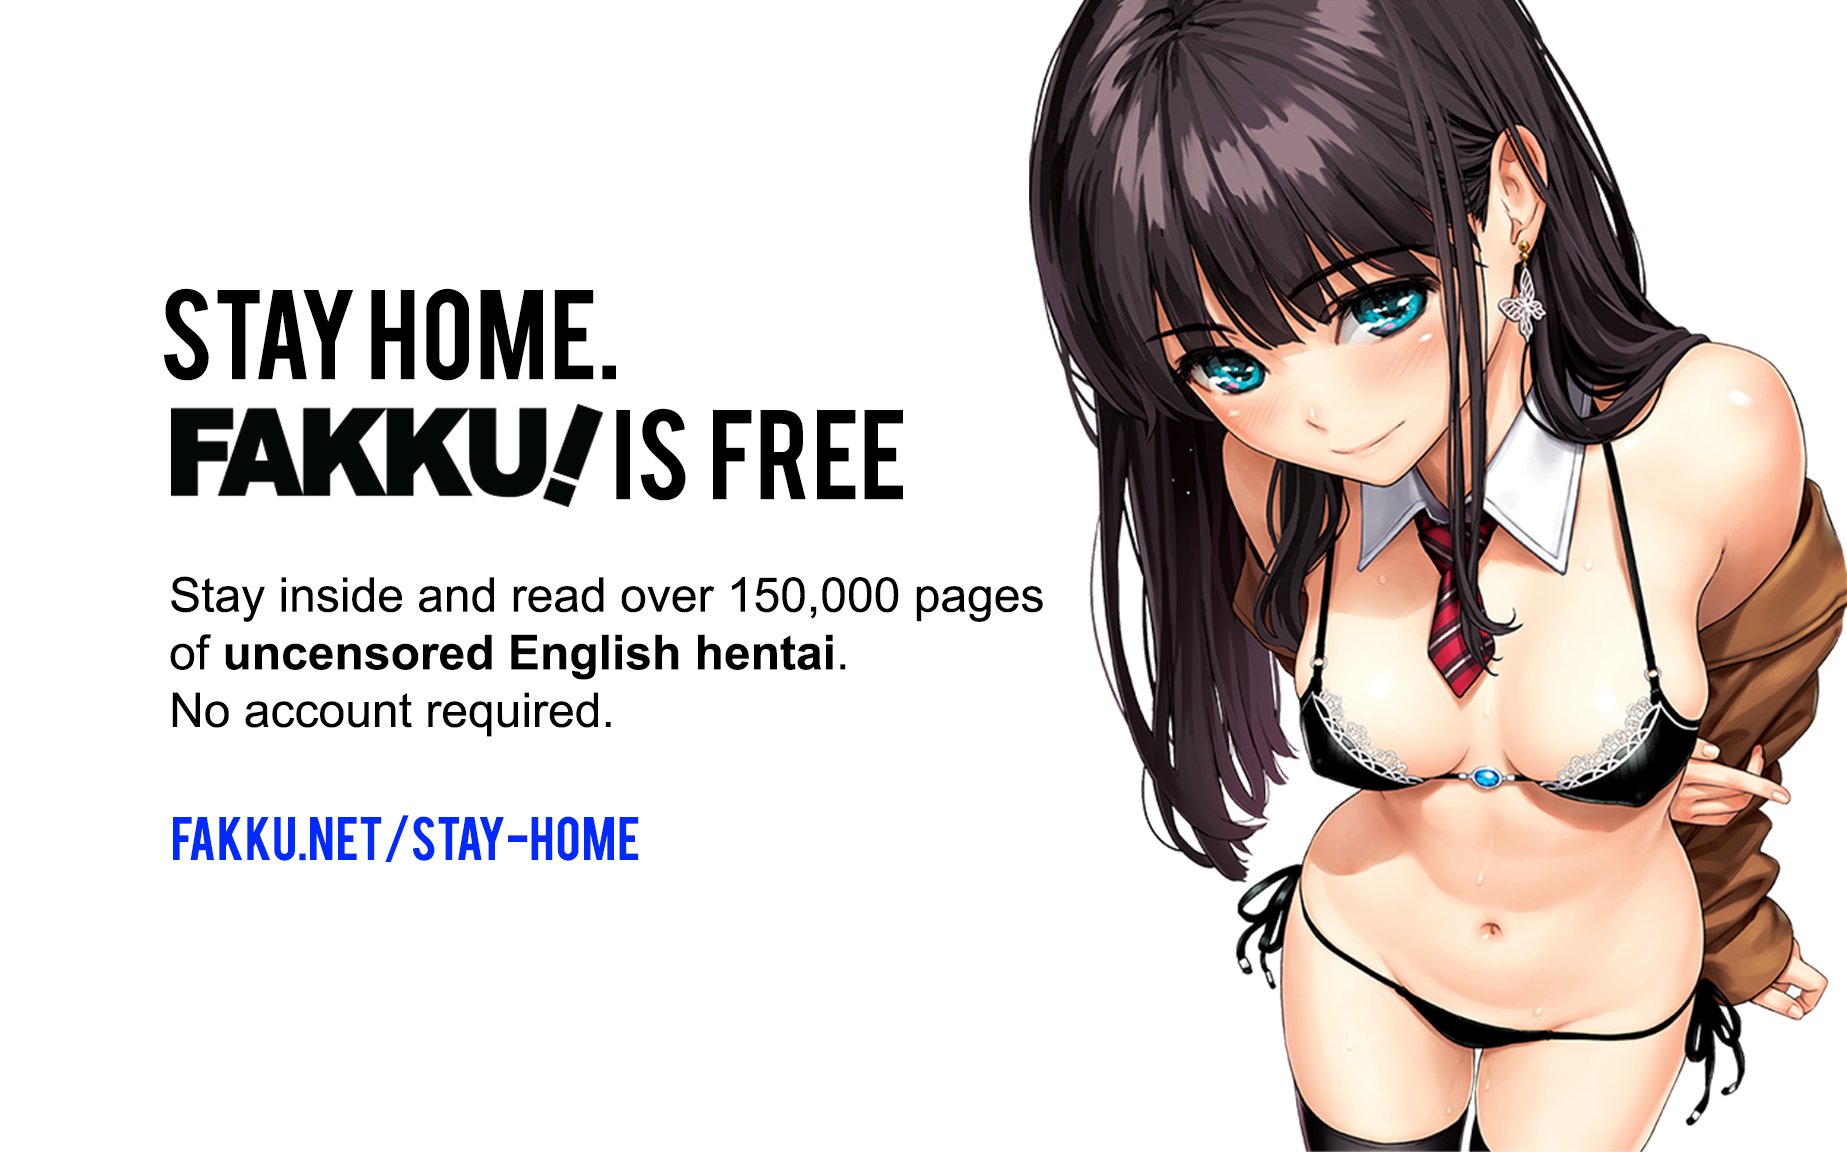 La web de manga para adultos Fakku! libera su contenido de forma gratuita.